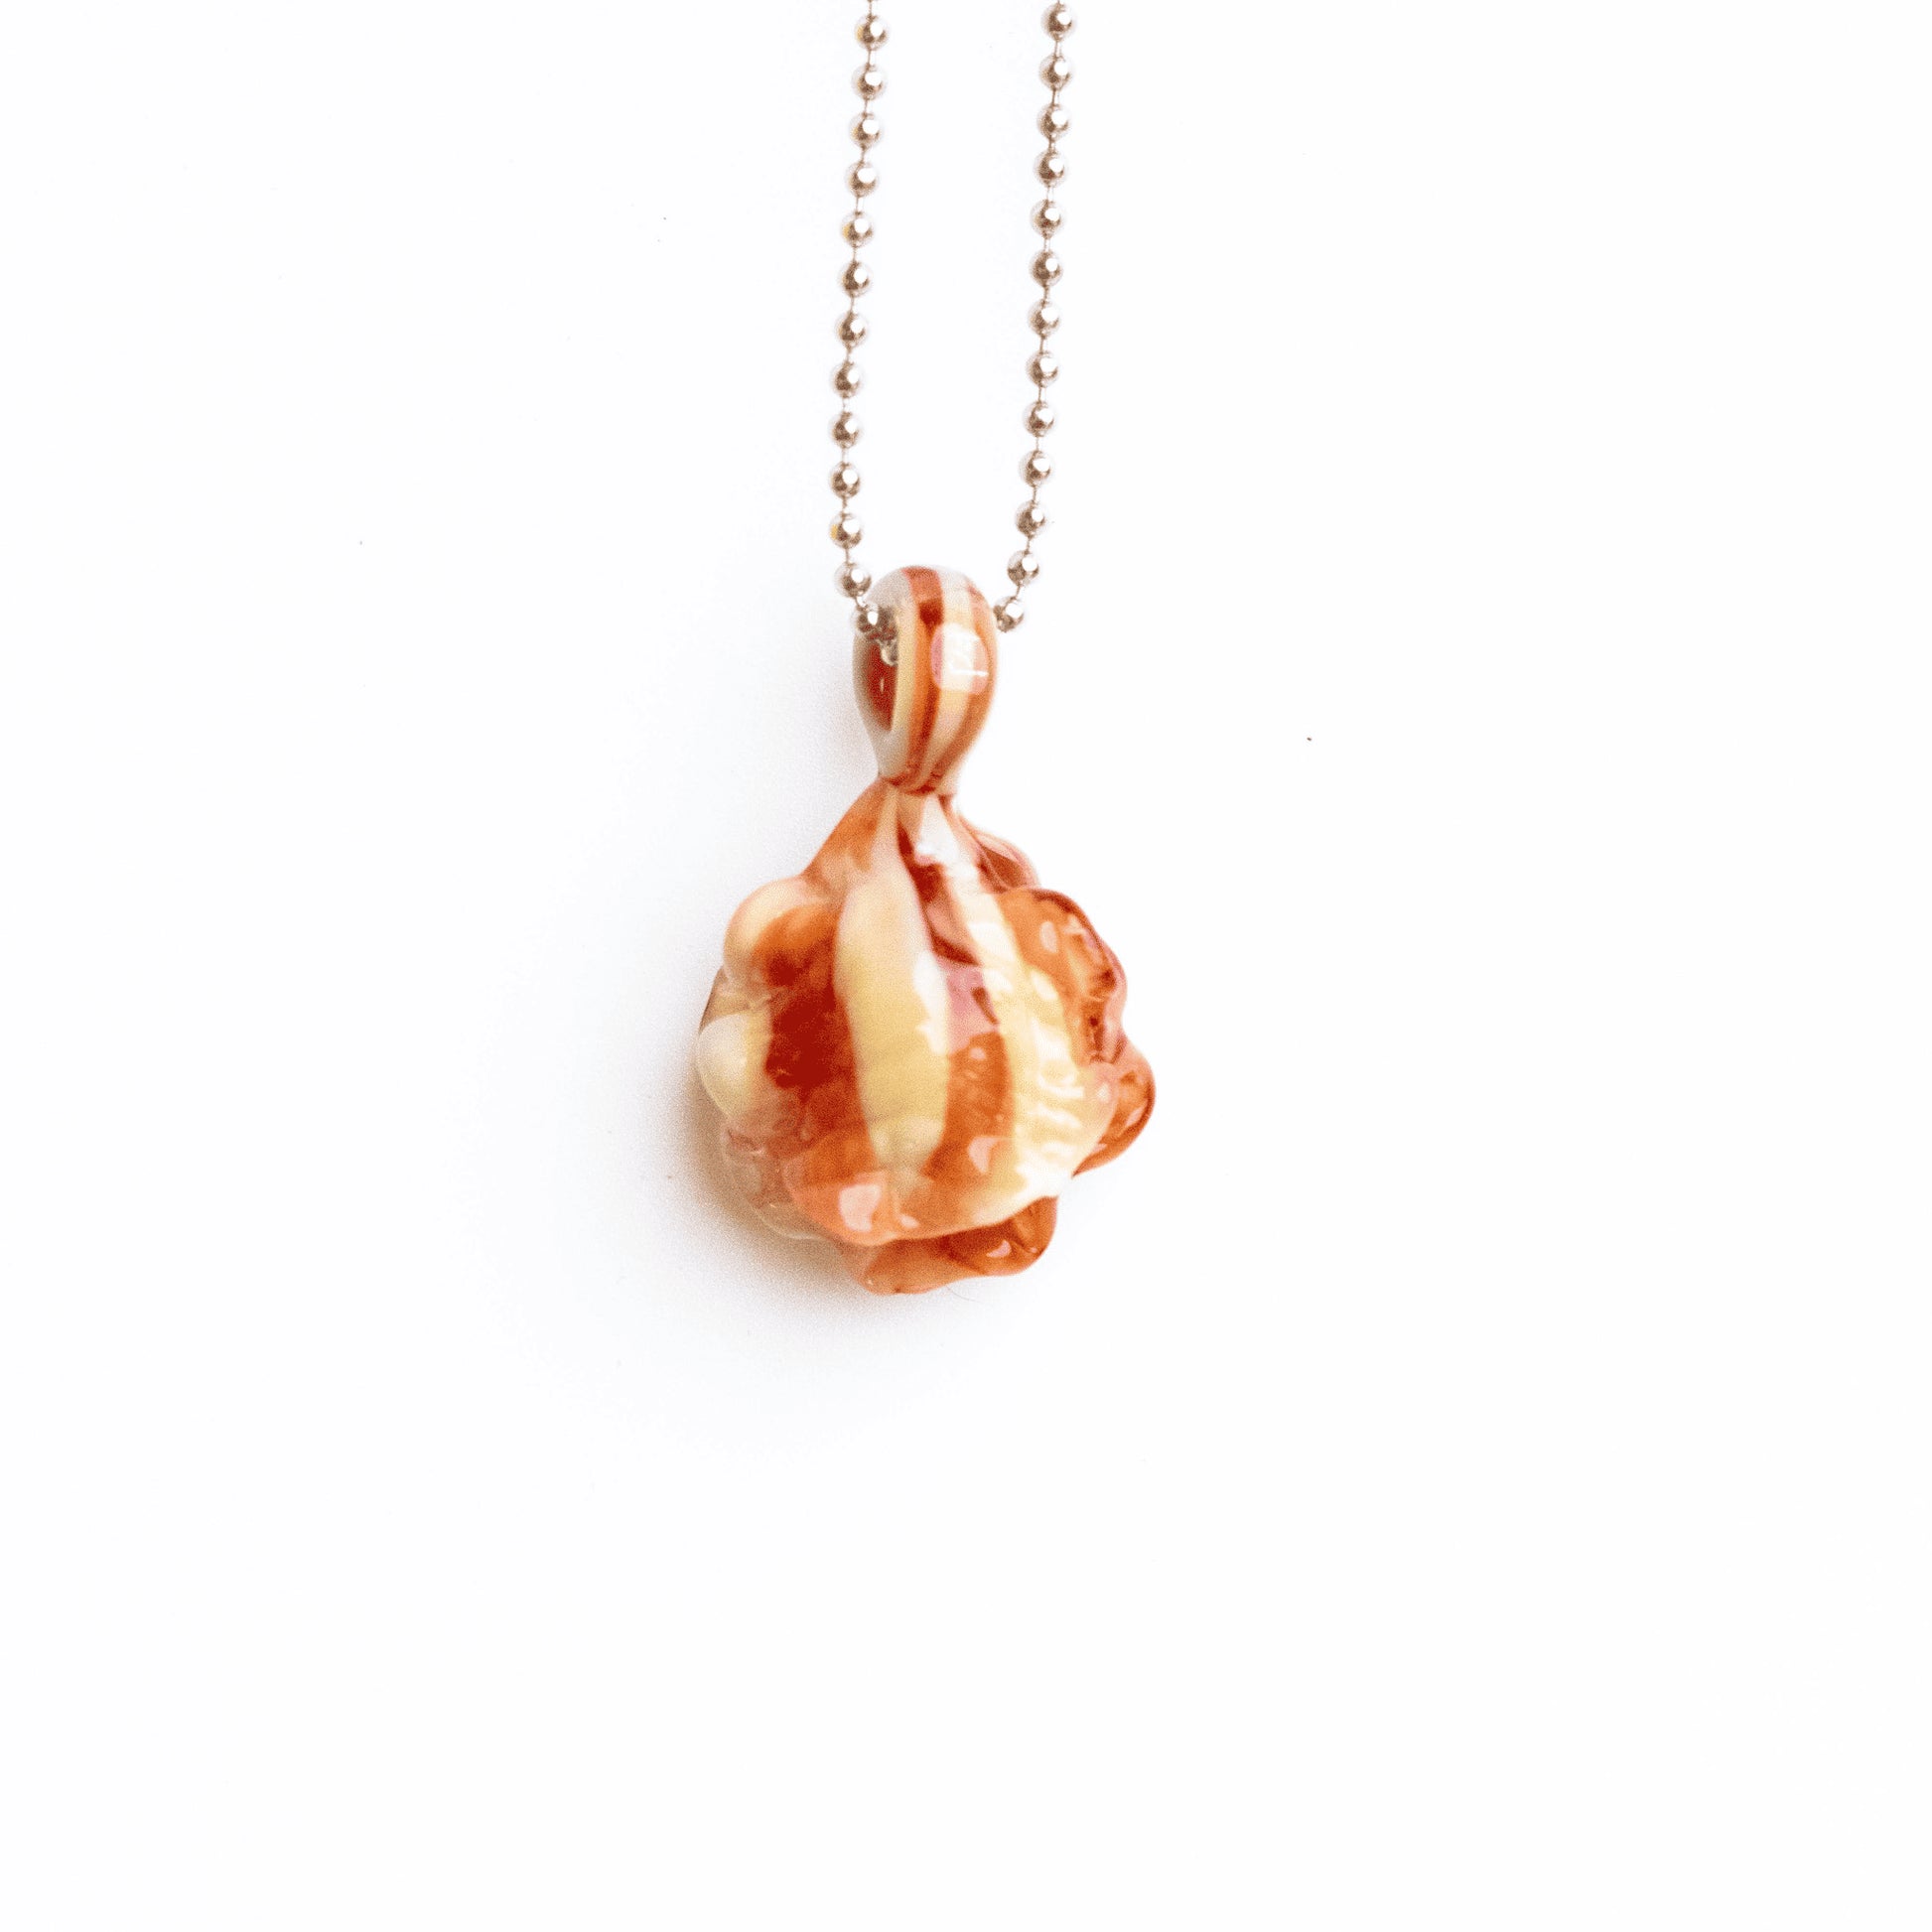 heady glass pendant - Oyster Seashell Pendant (A) by Patty D Glass